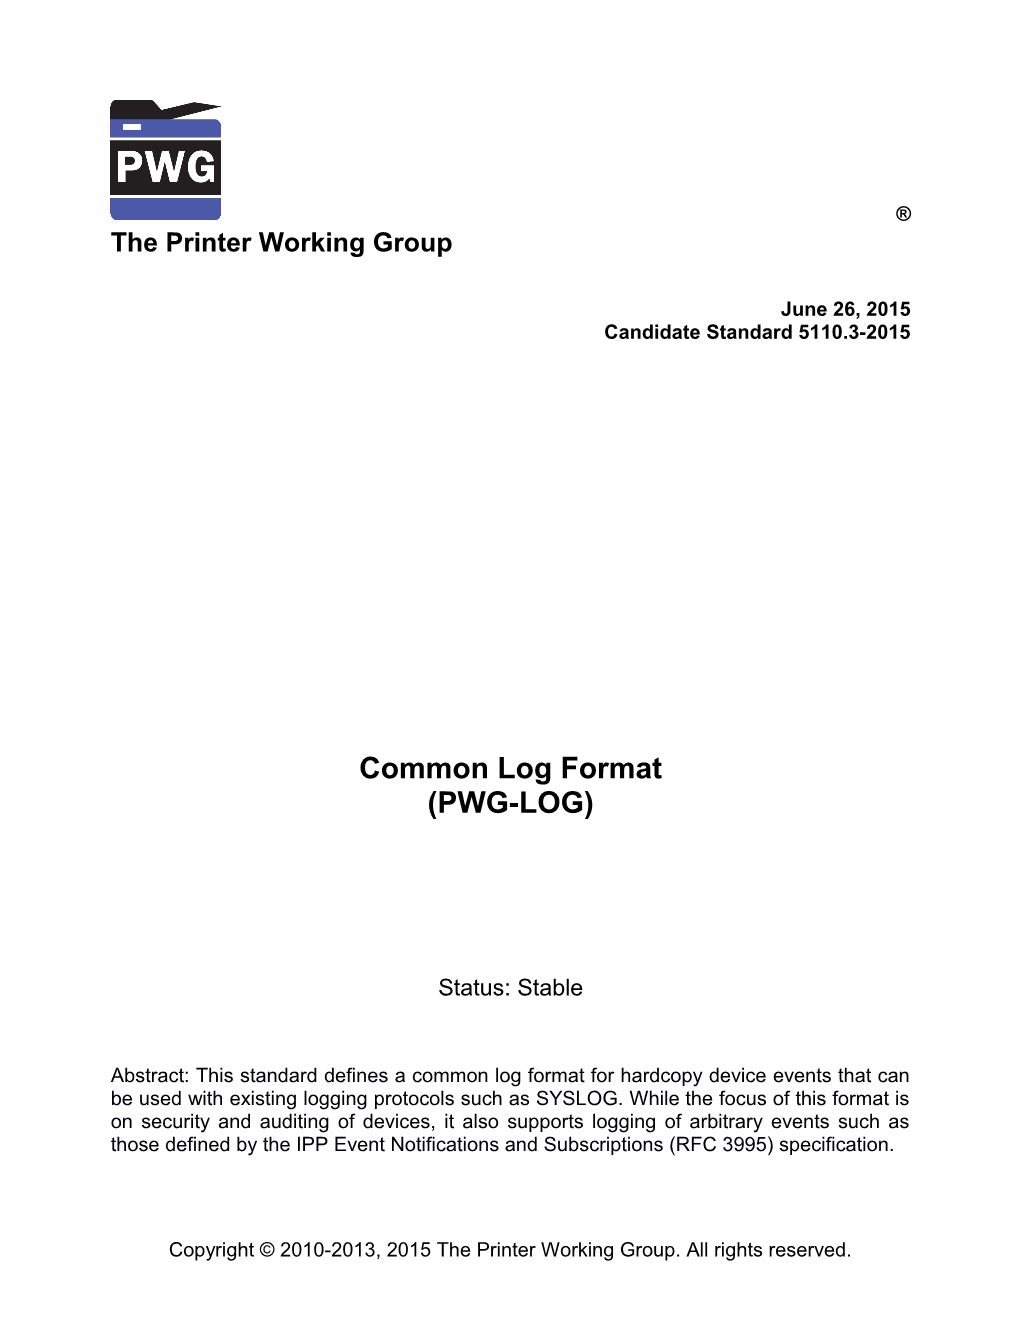 PWG Common Log Format